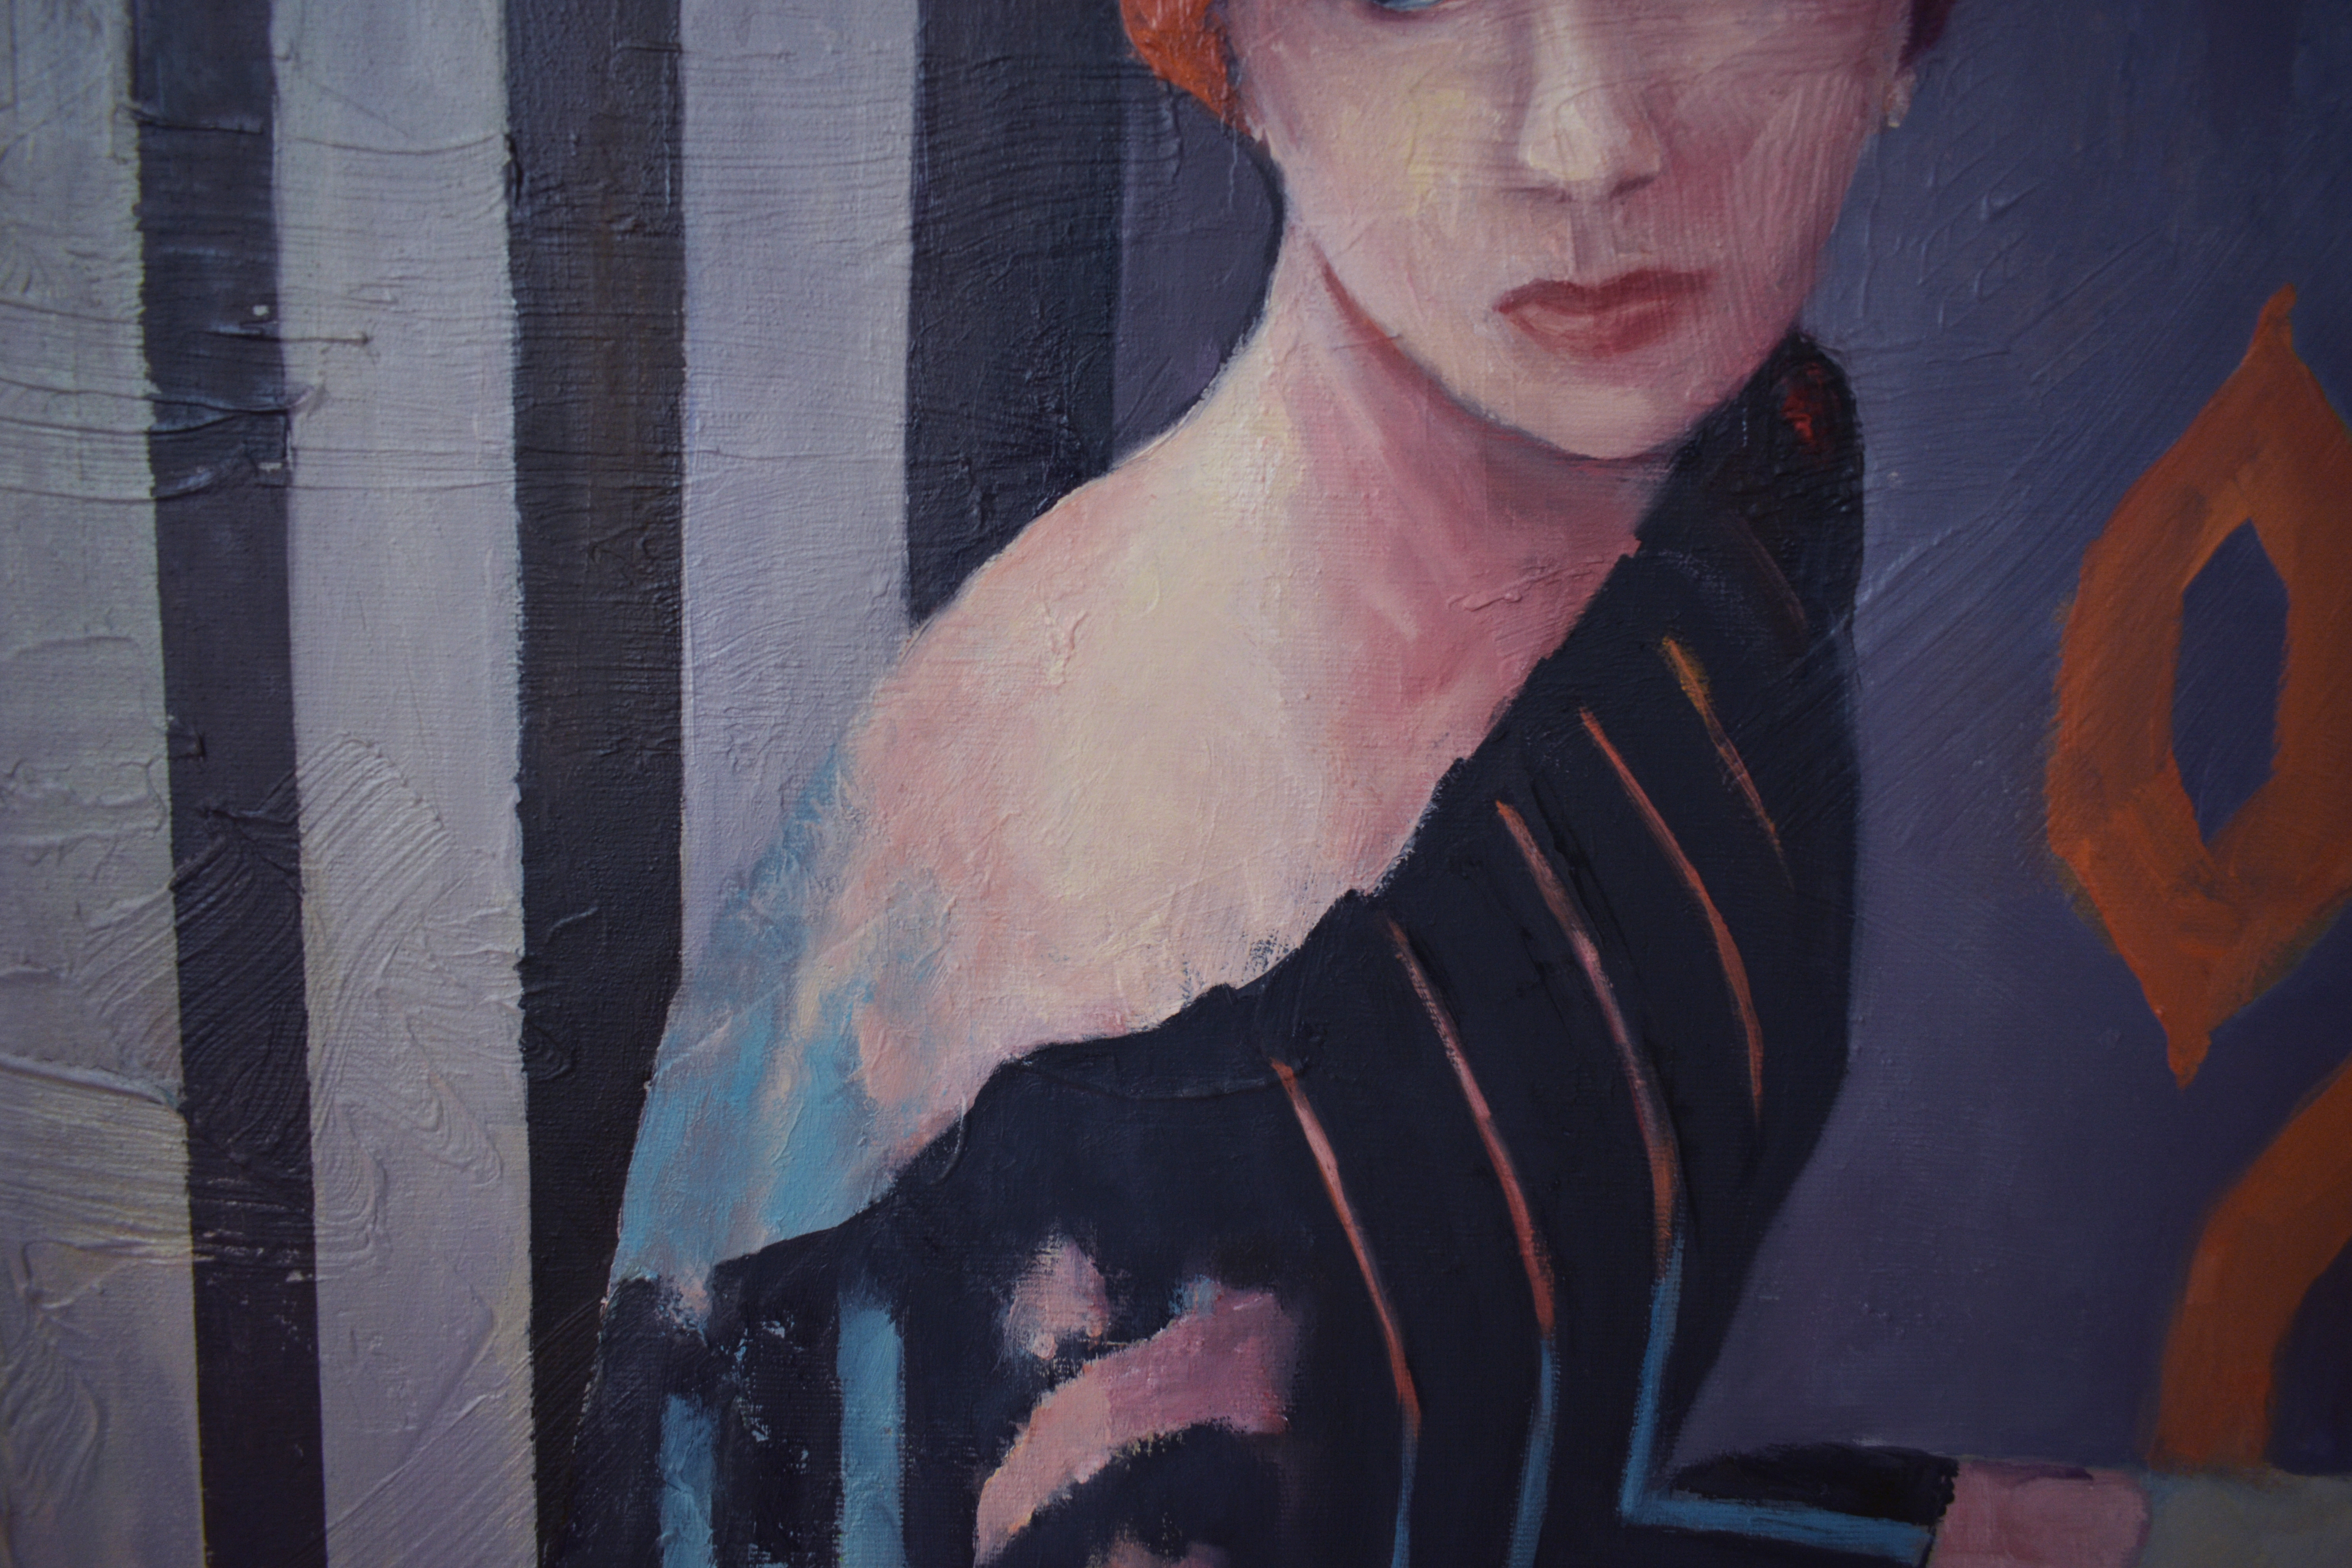 Painting by Marina Venediktova Stranger in red turban detail